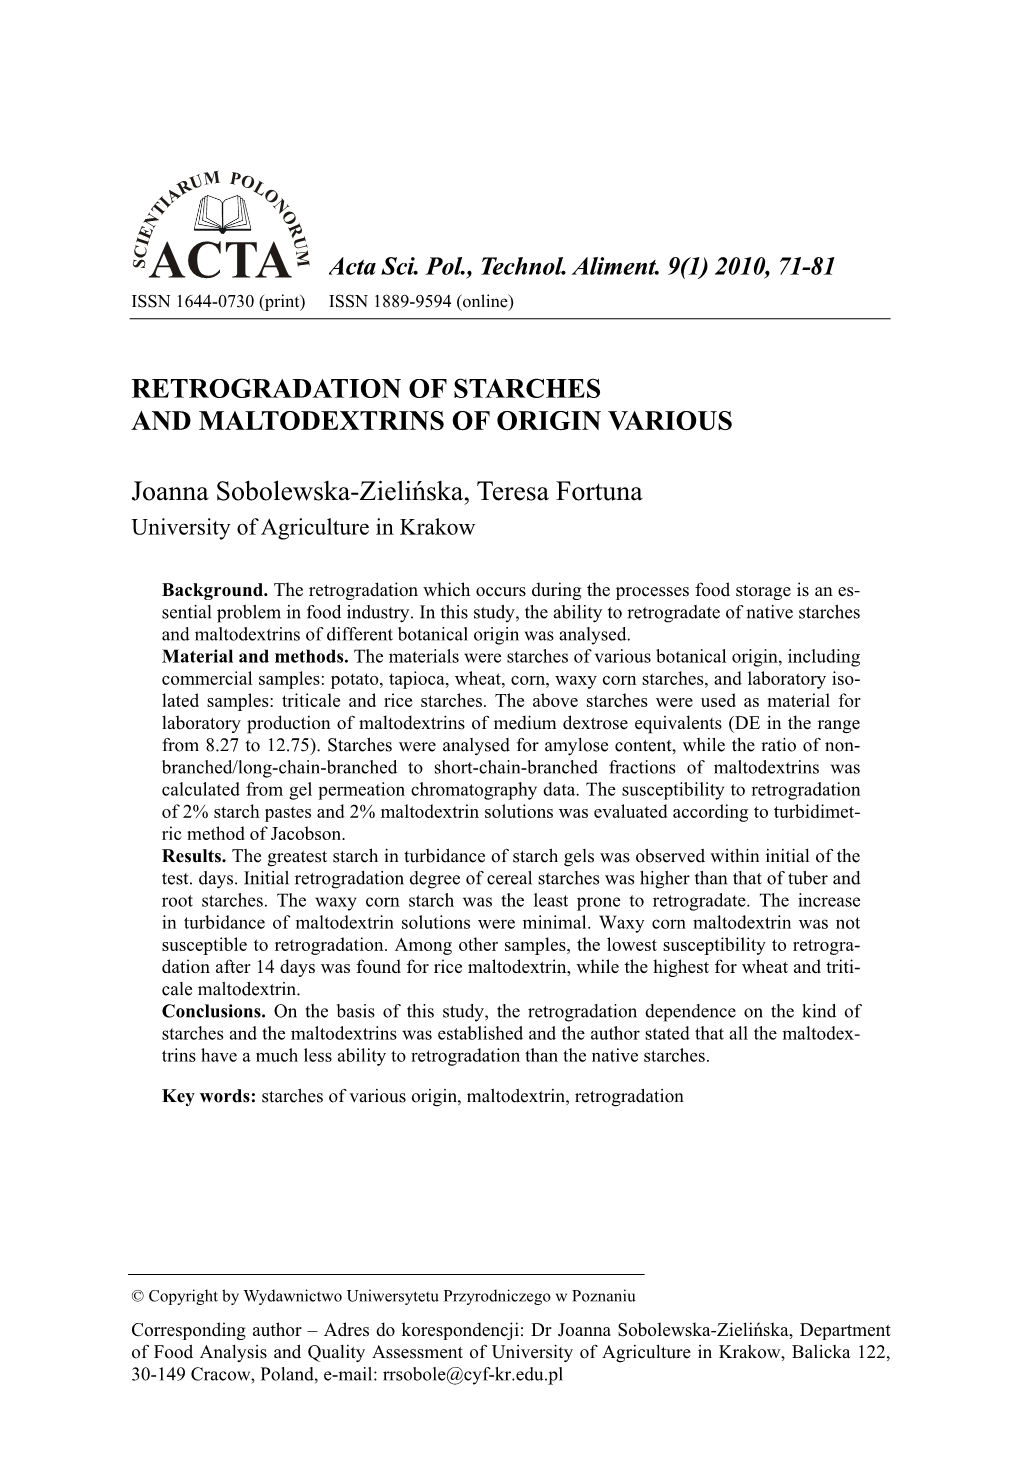 Retrogradation of Starches and Maltodextrins of Origin Various